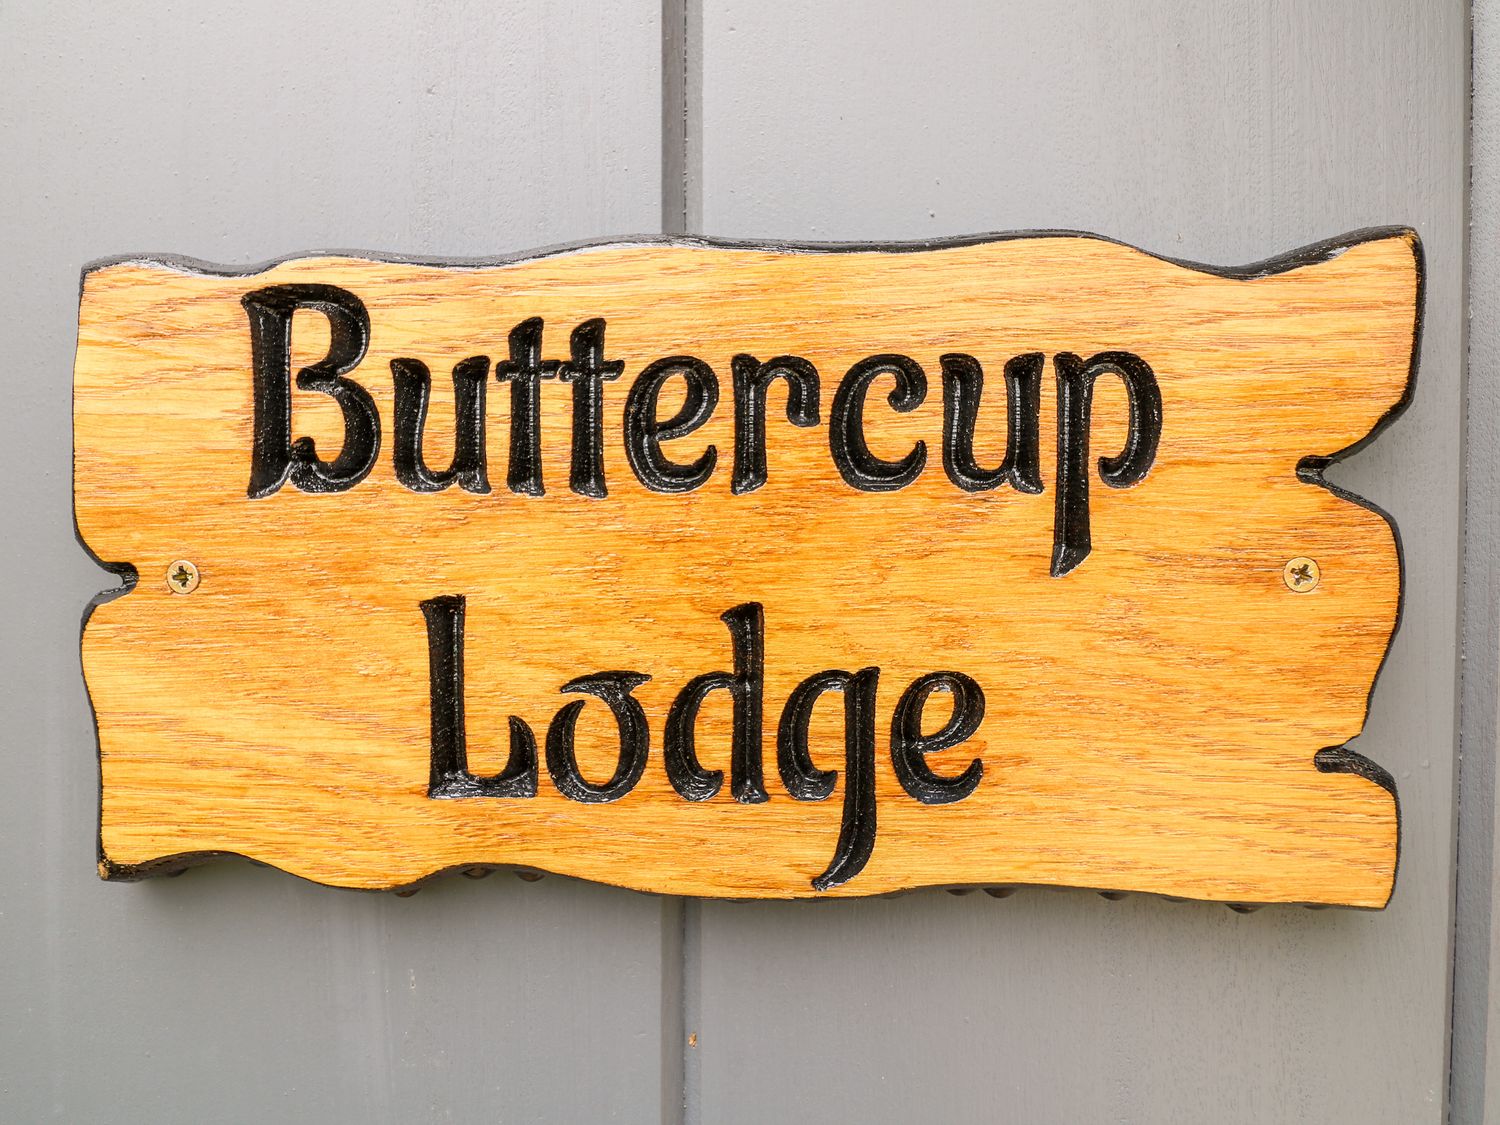 Buttercup Lodge, Misterton